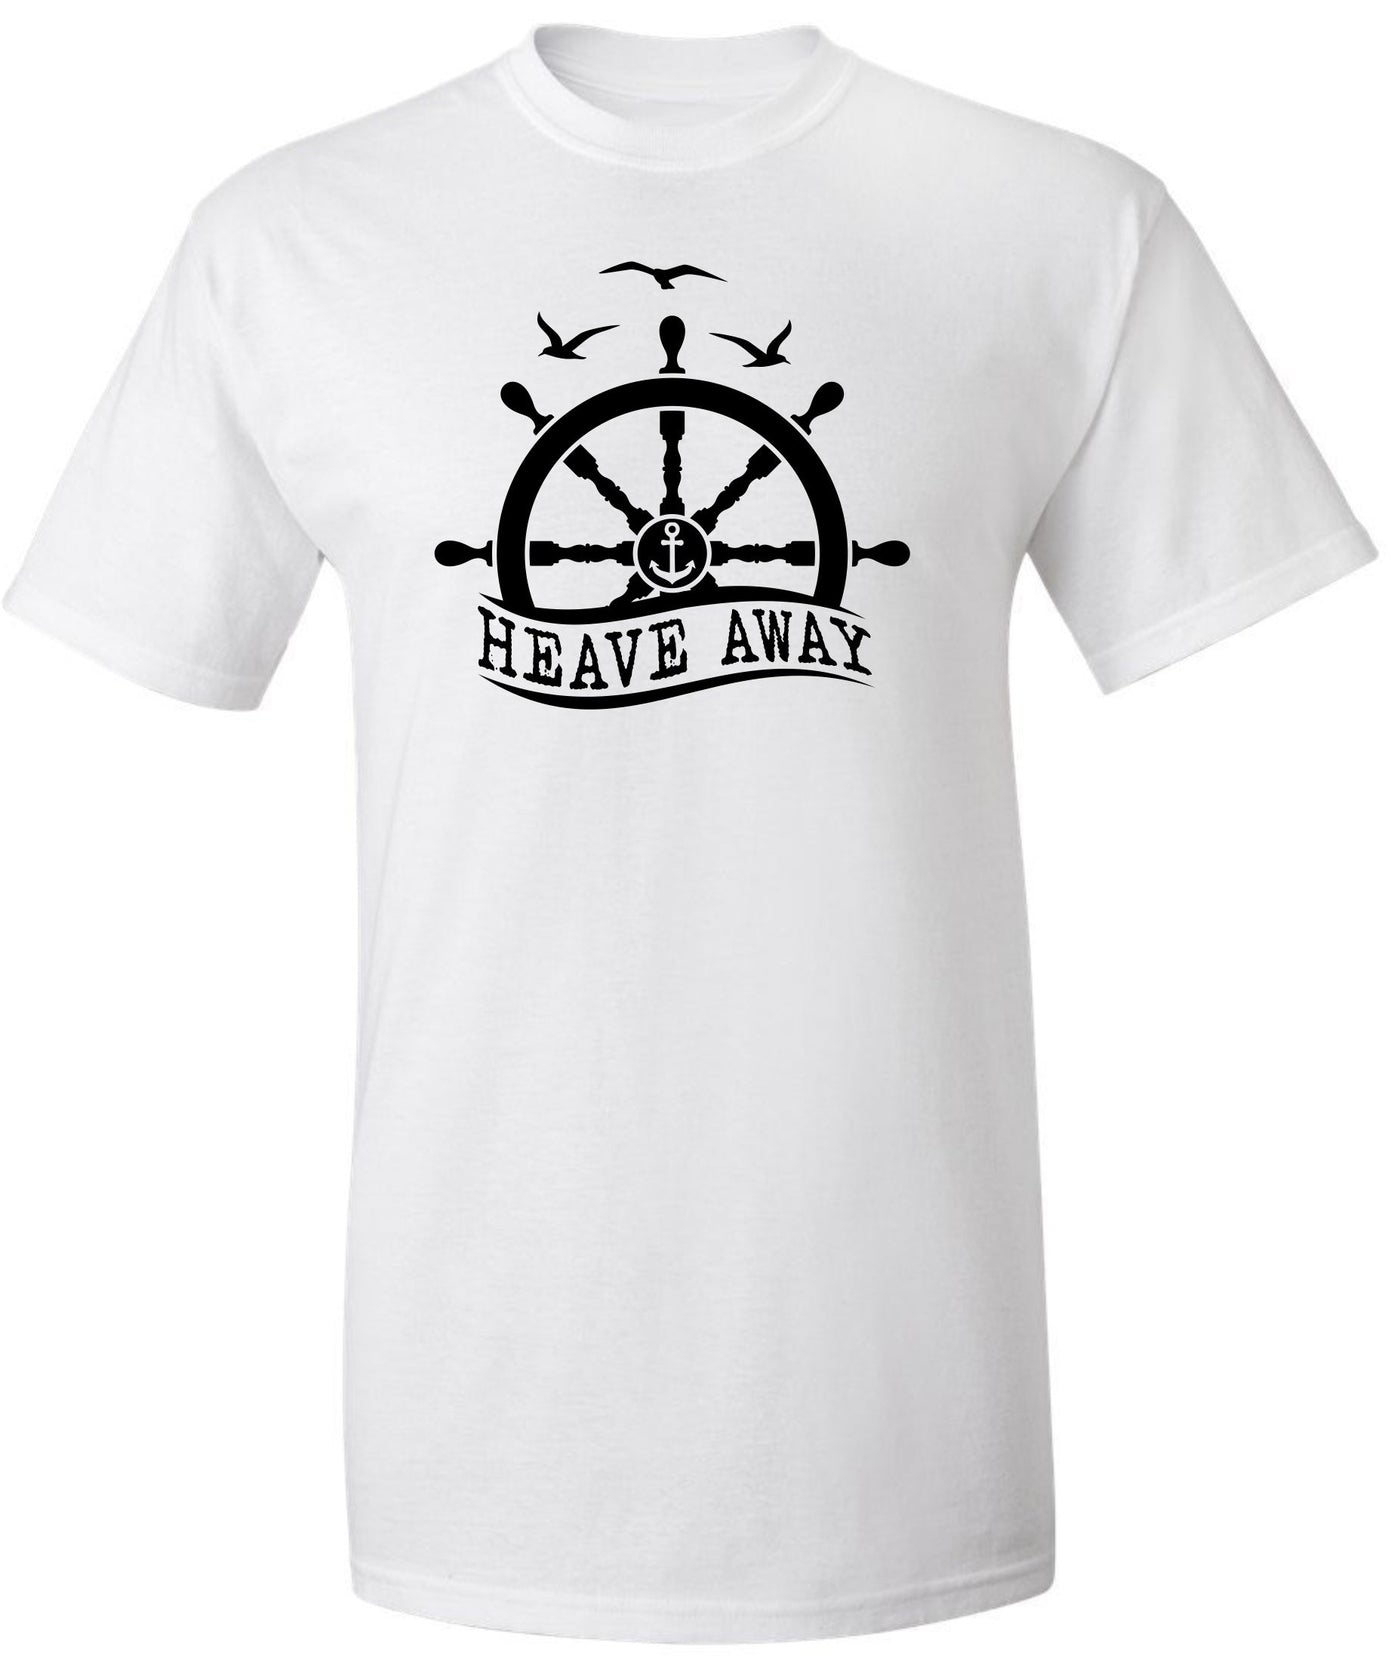 "Heave Away" T-Shirt